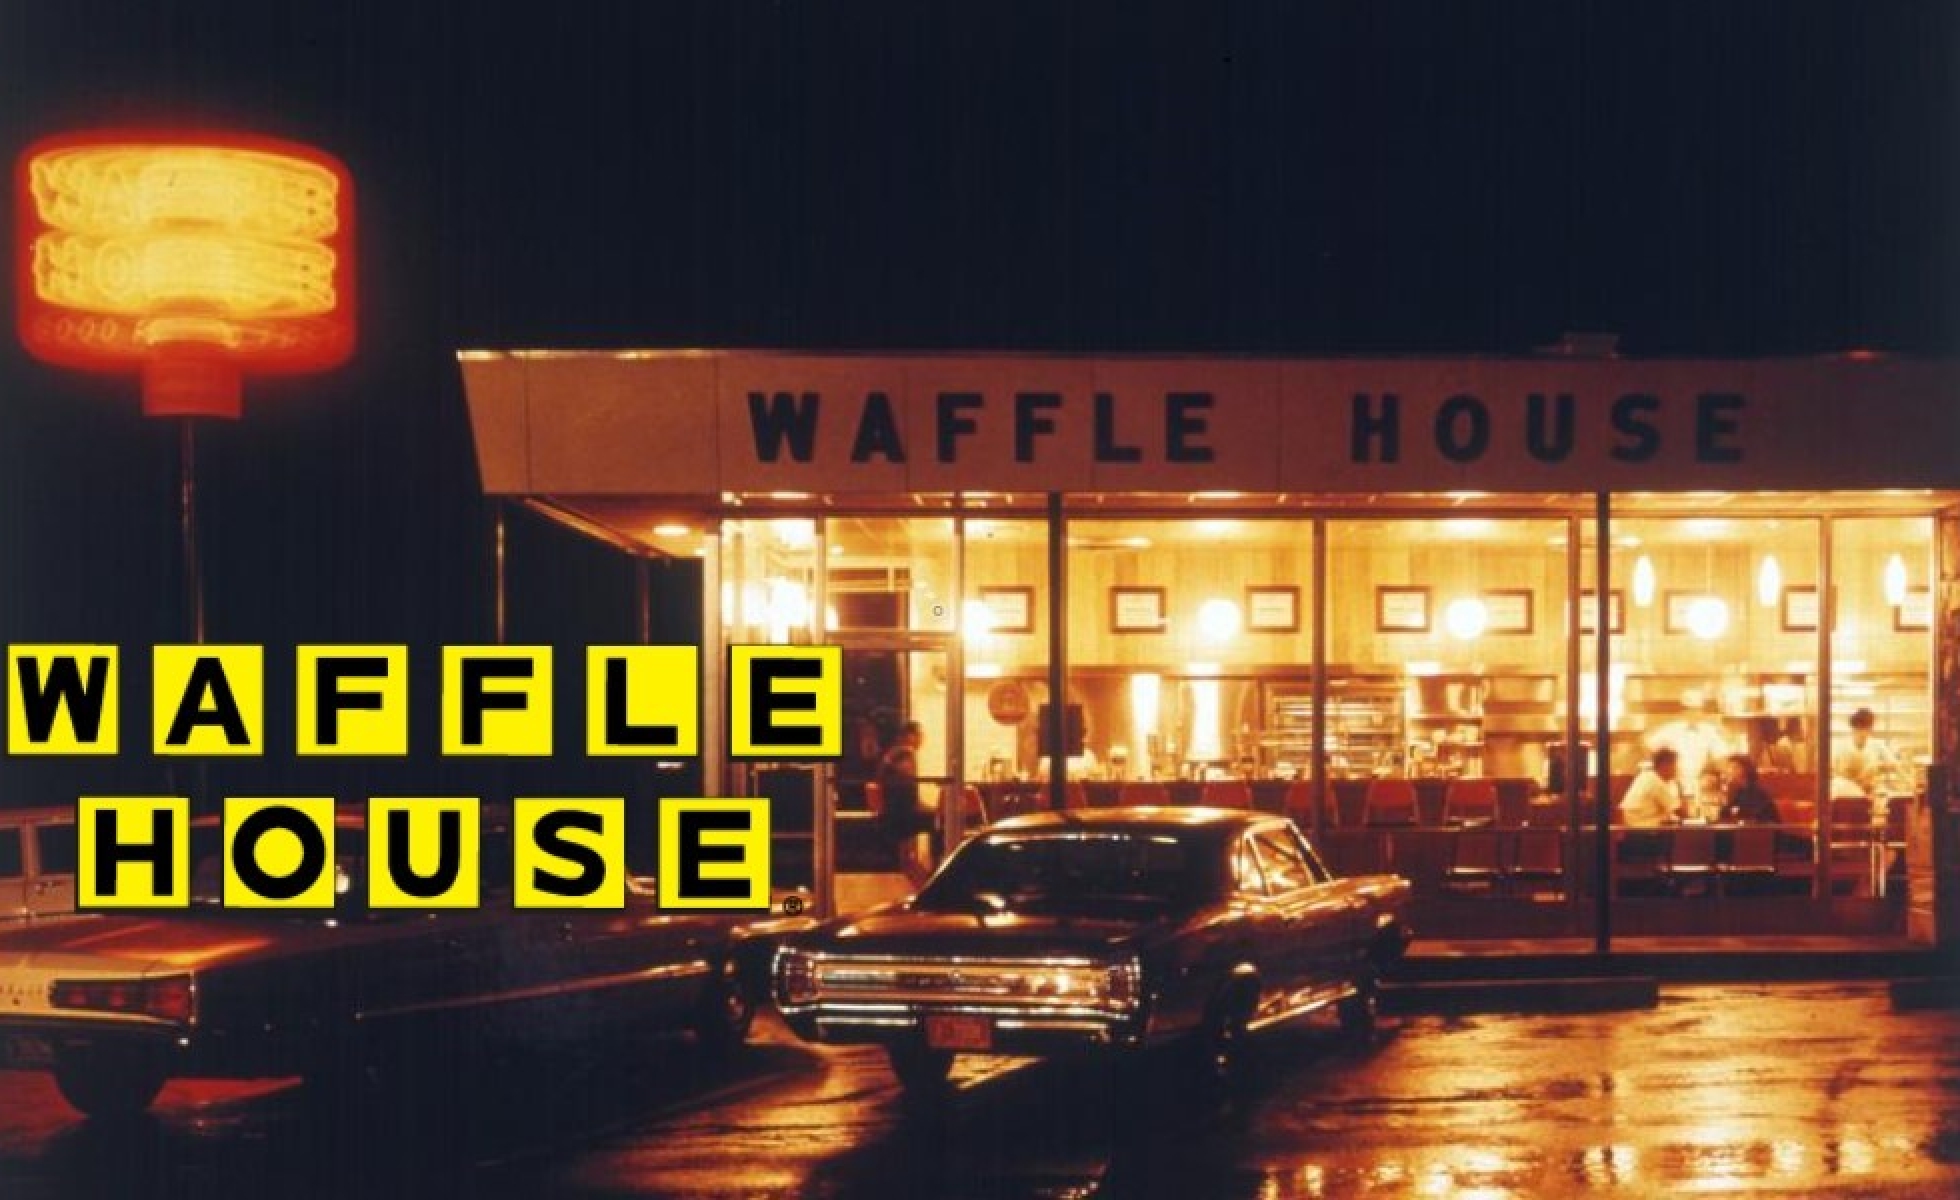 Contact - Waffle House